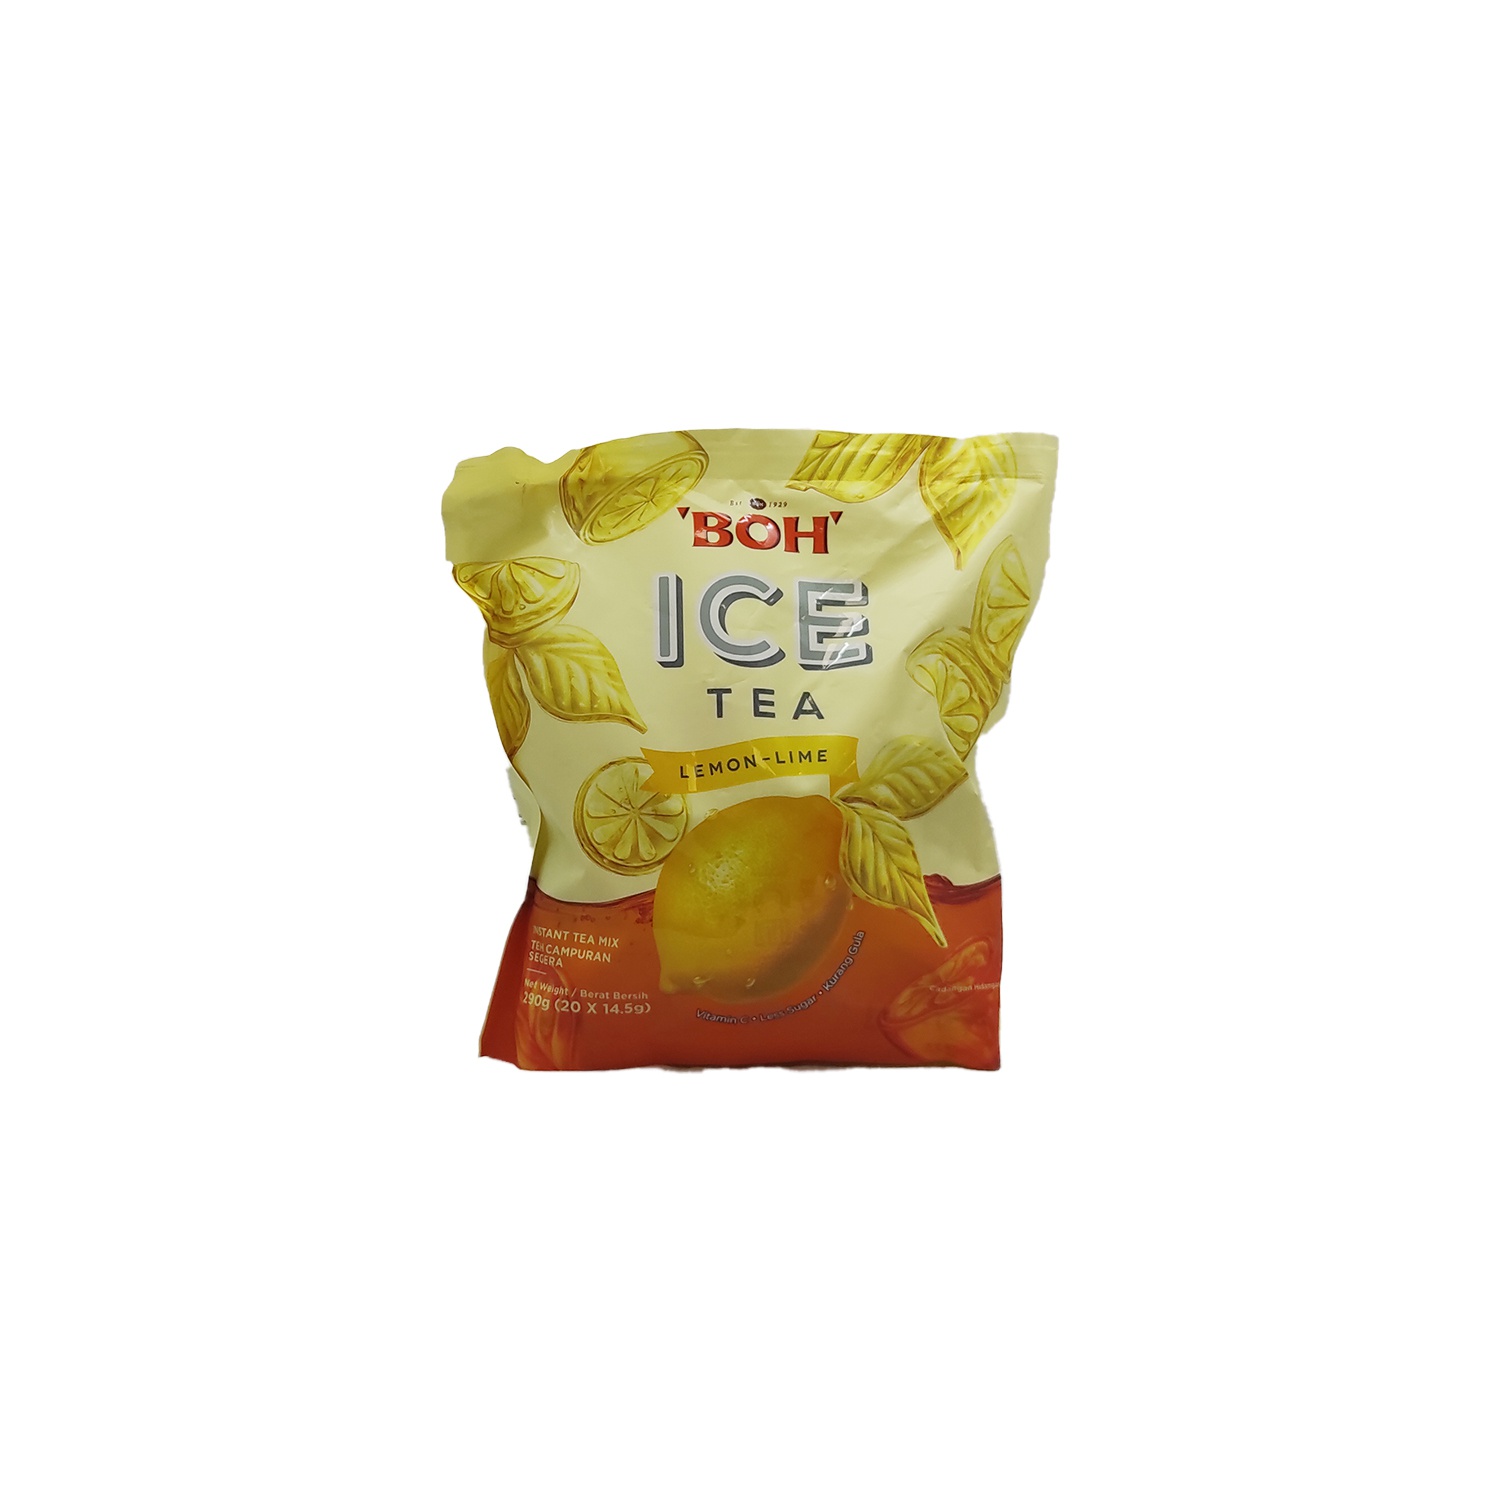 Boh Lemon Lime Ice Tea 20'S 290G - BOH - Rtd Single Consumption - in Sri Lanka